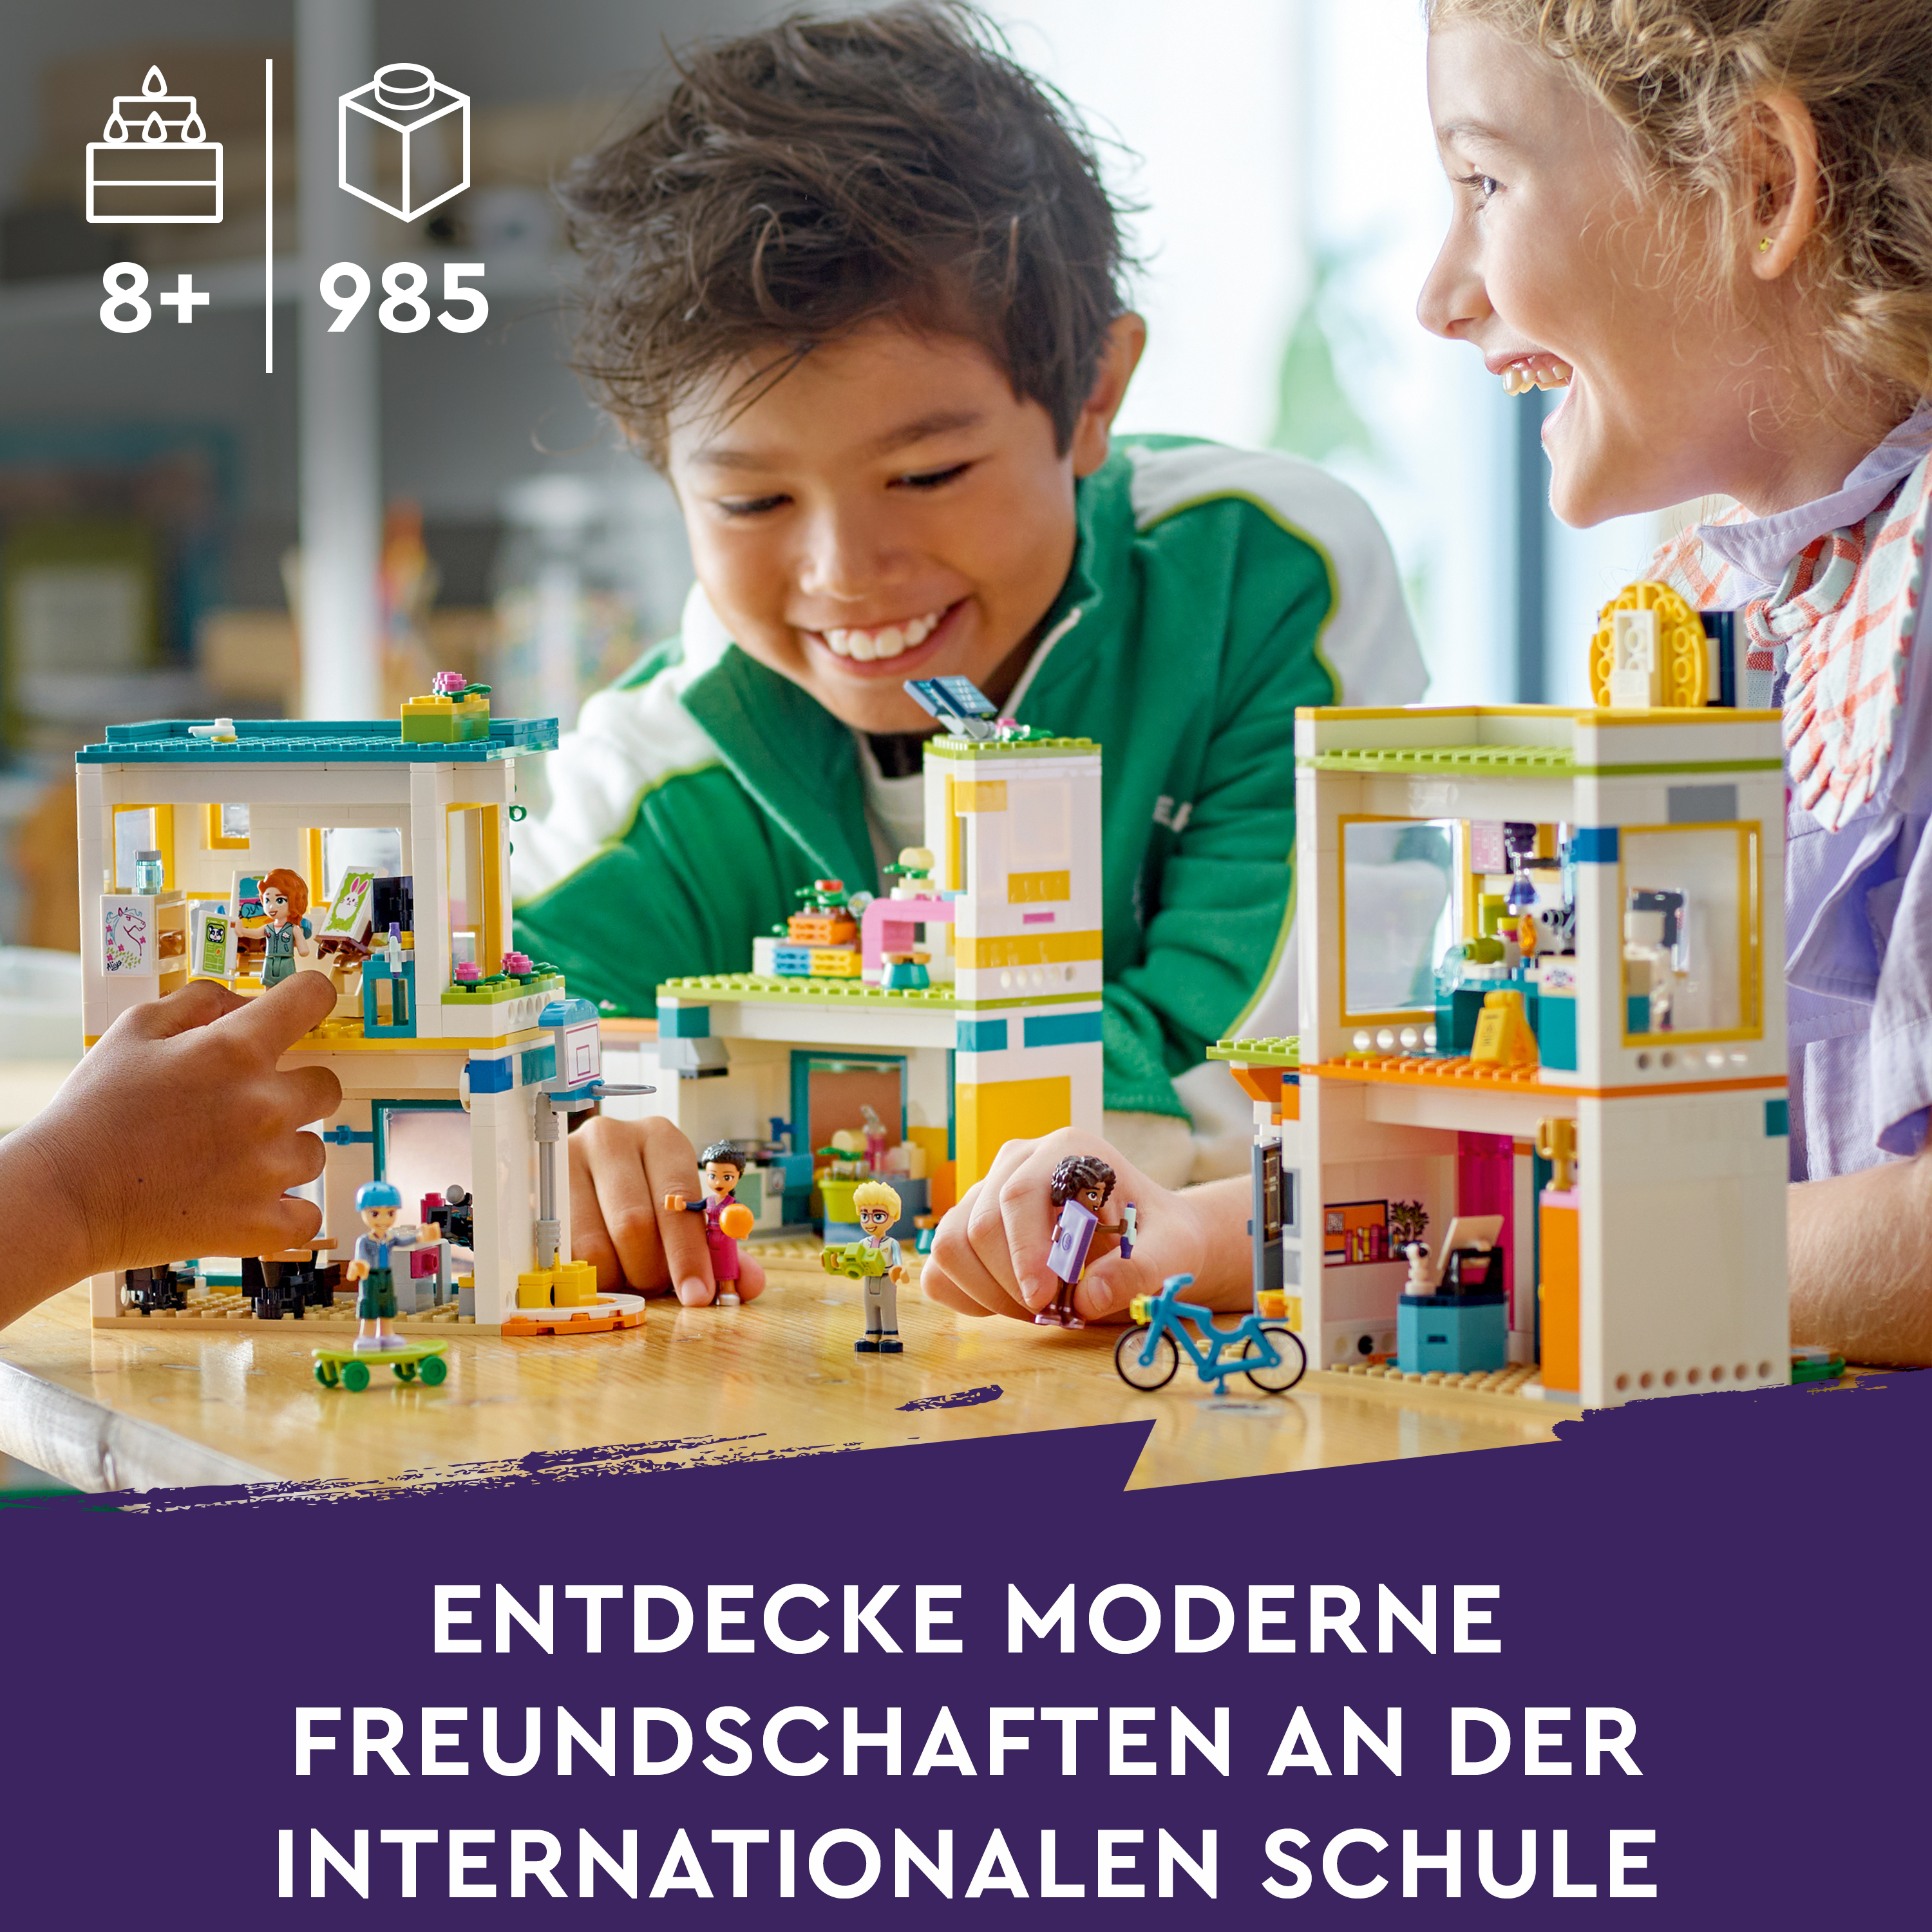 LEGO Friends 41731 Schule Bausatz, Internationale Mehrfarbig